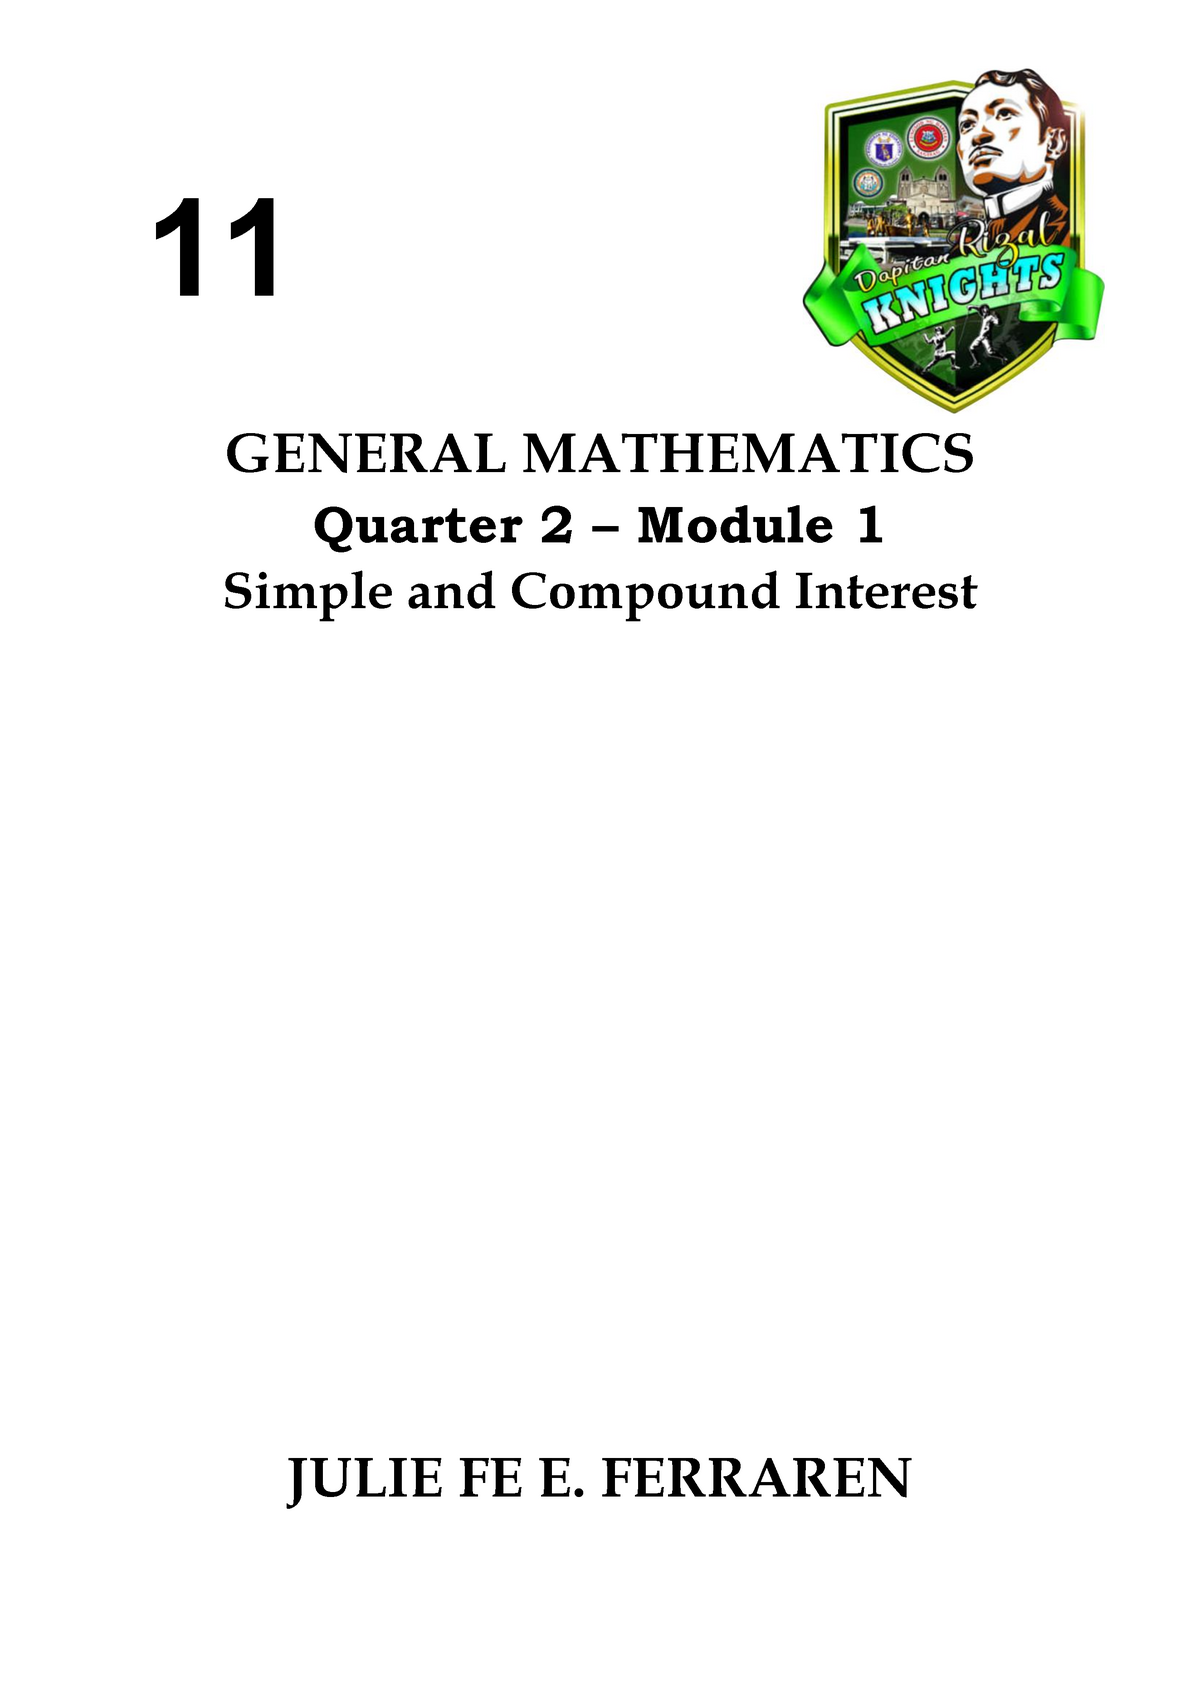 iwrite math 11 pdf